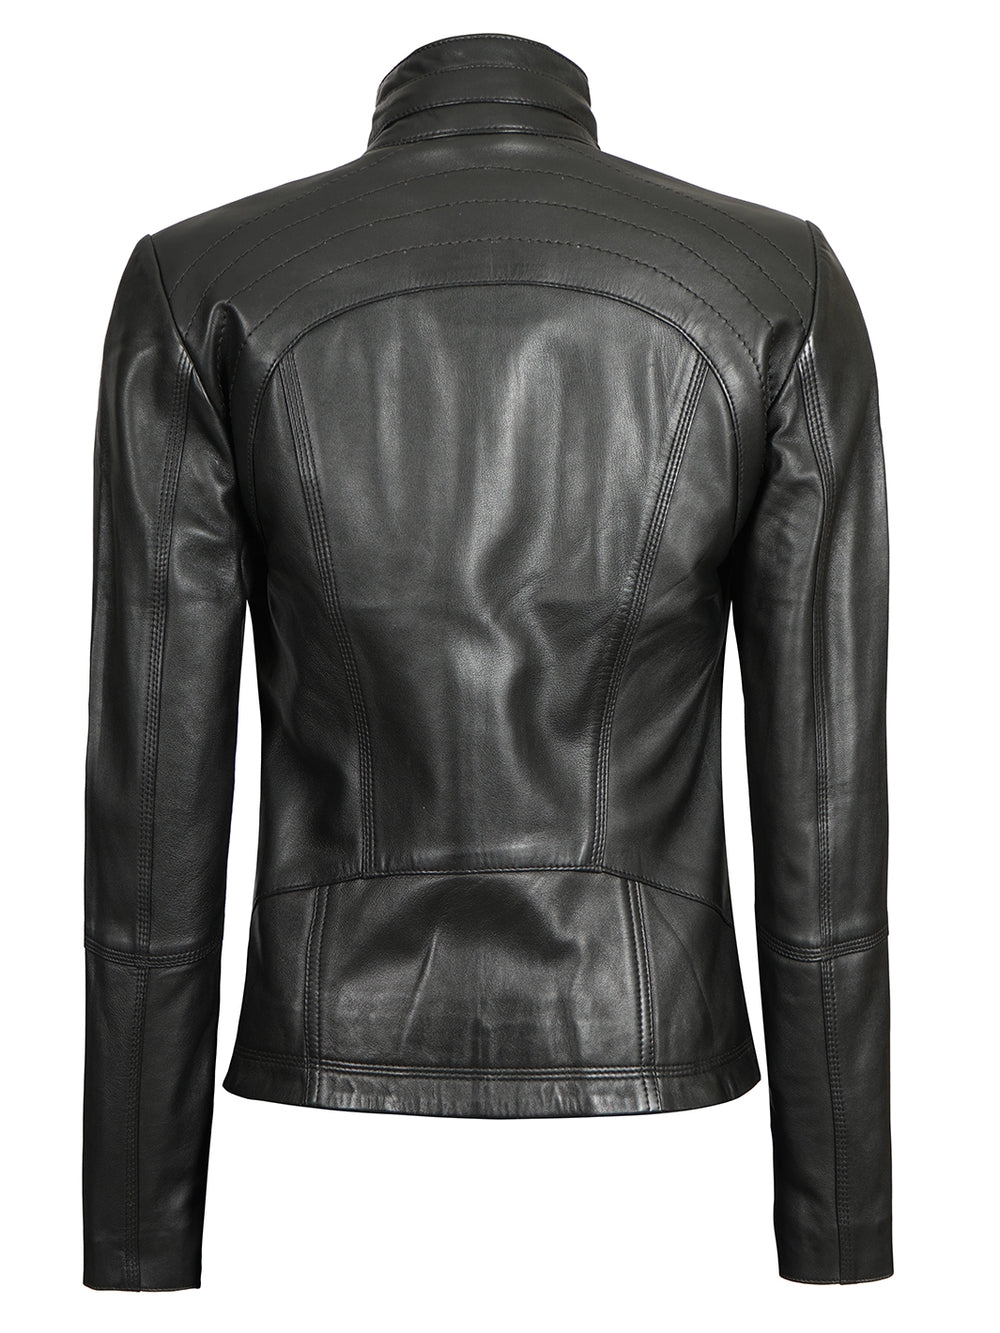 black leather jacket women's